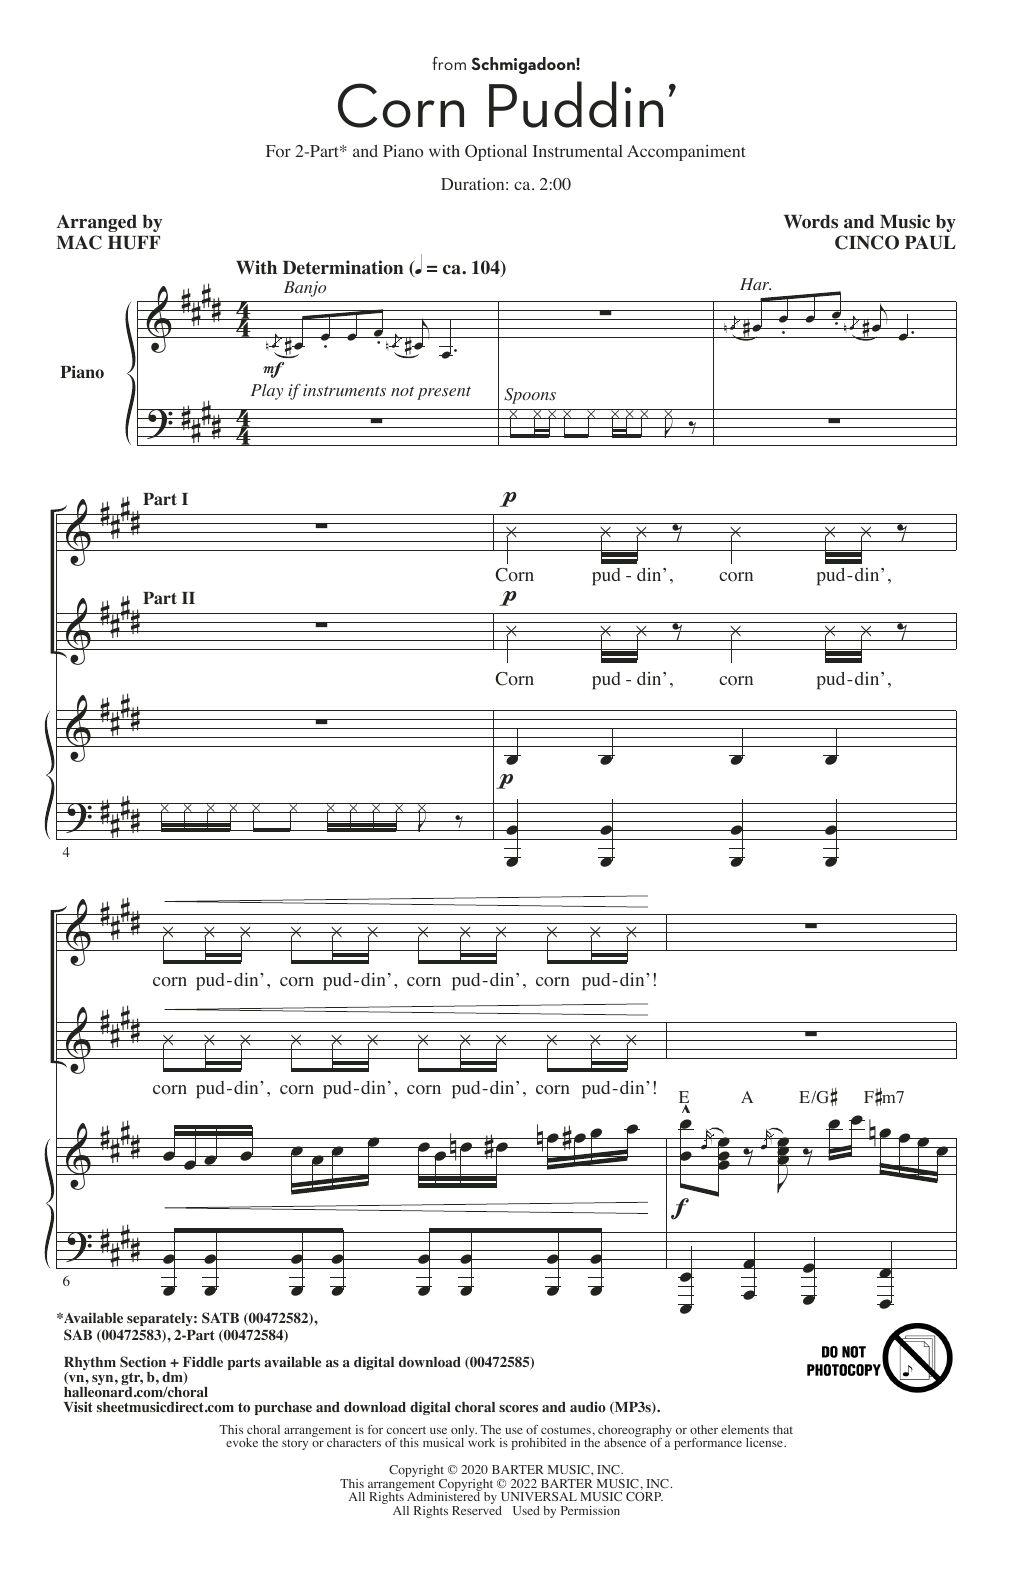 Cinco Paul Corn Puddin' (from Schmigadoon!) (arr. Mac Huff) Sheet Music Notes & Chords for SATB Choir - Download or Print PDF